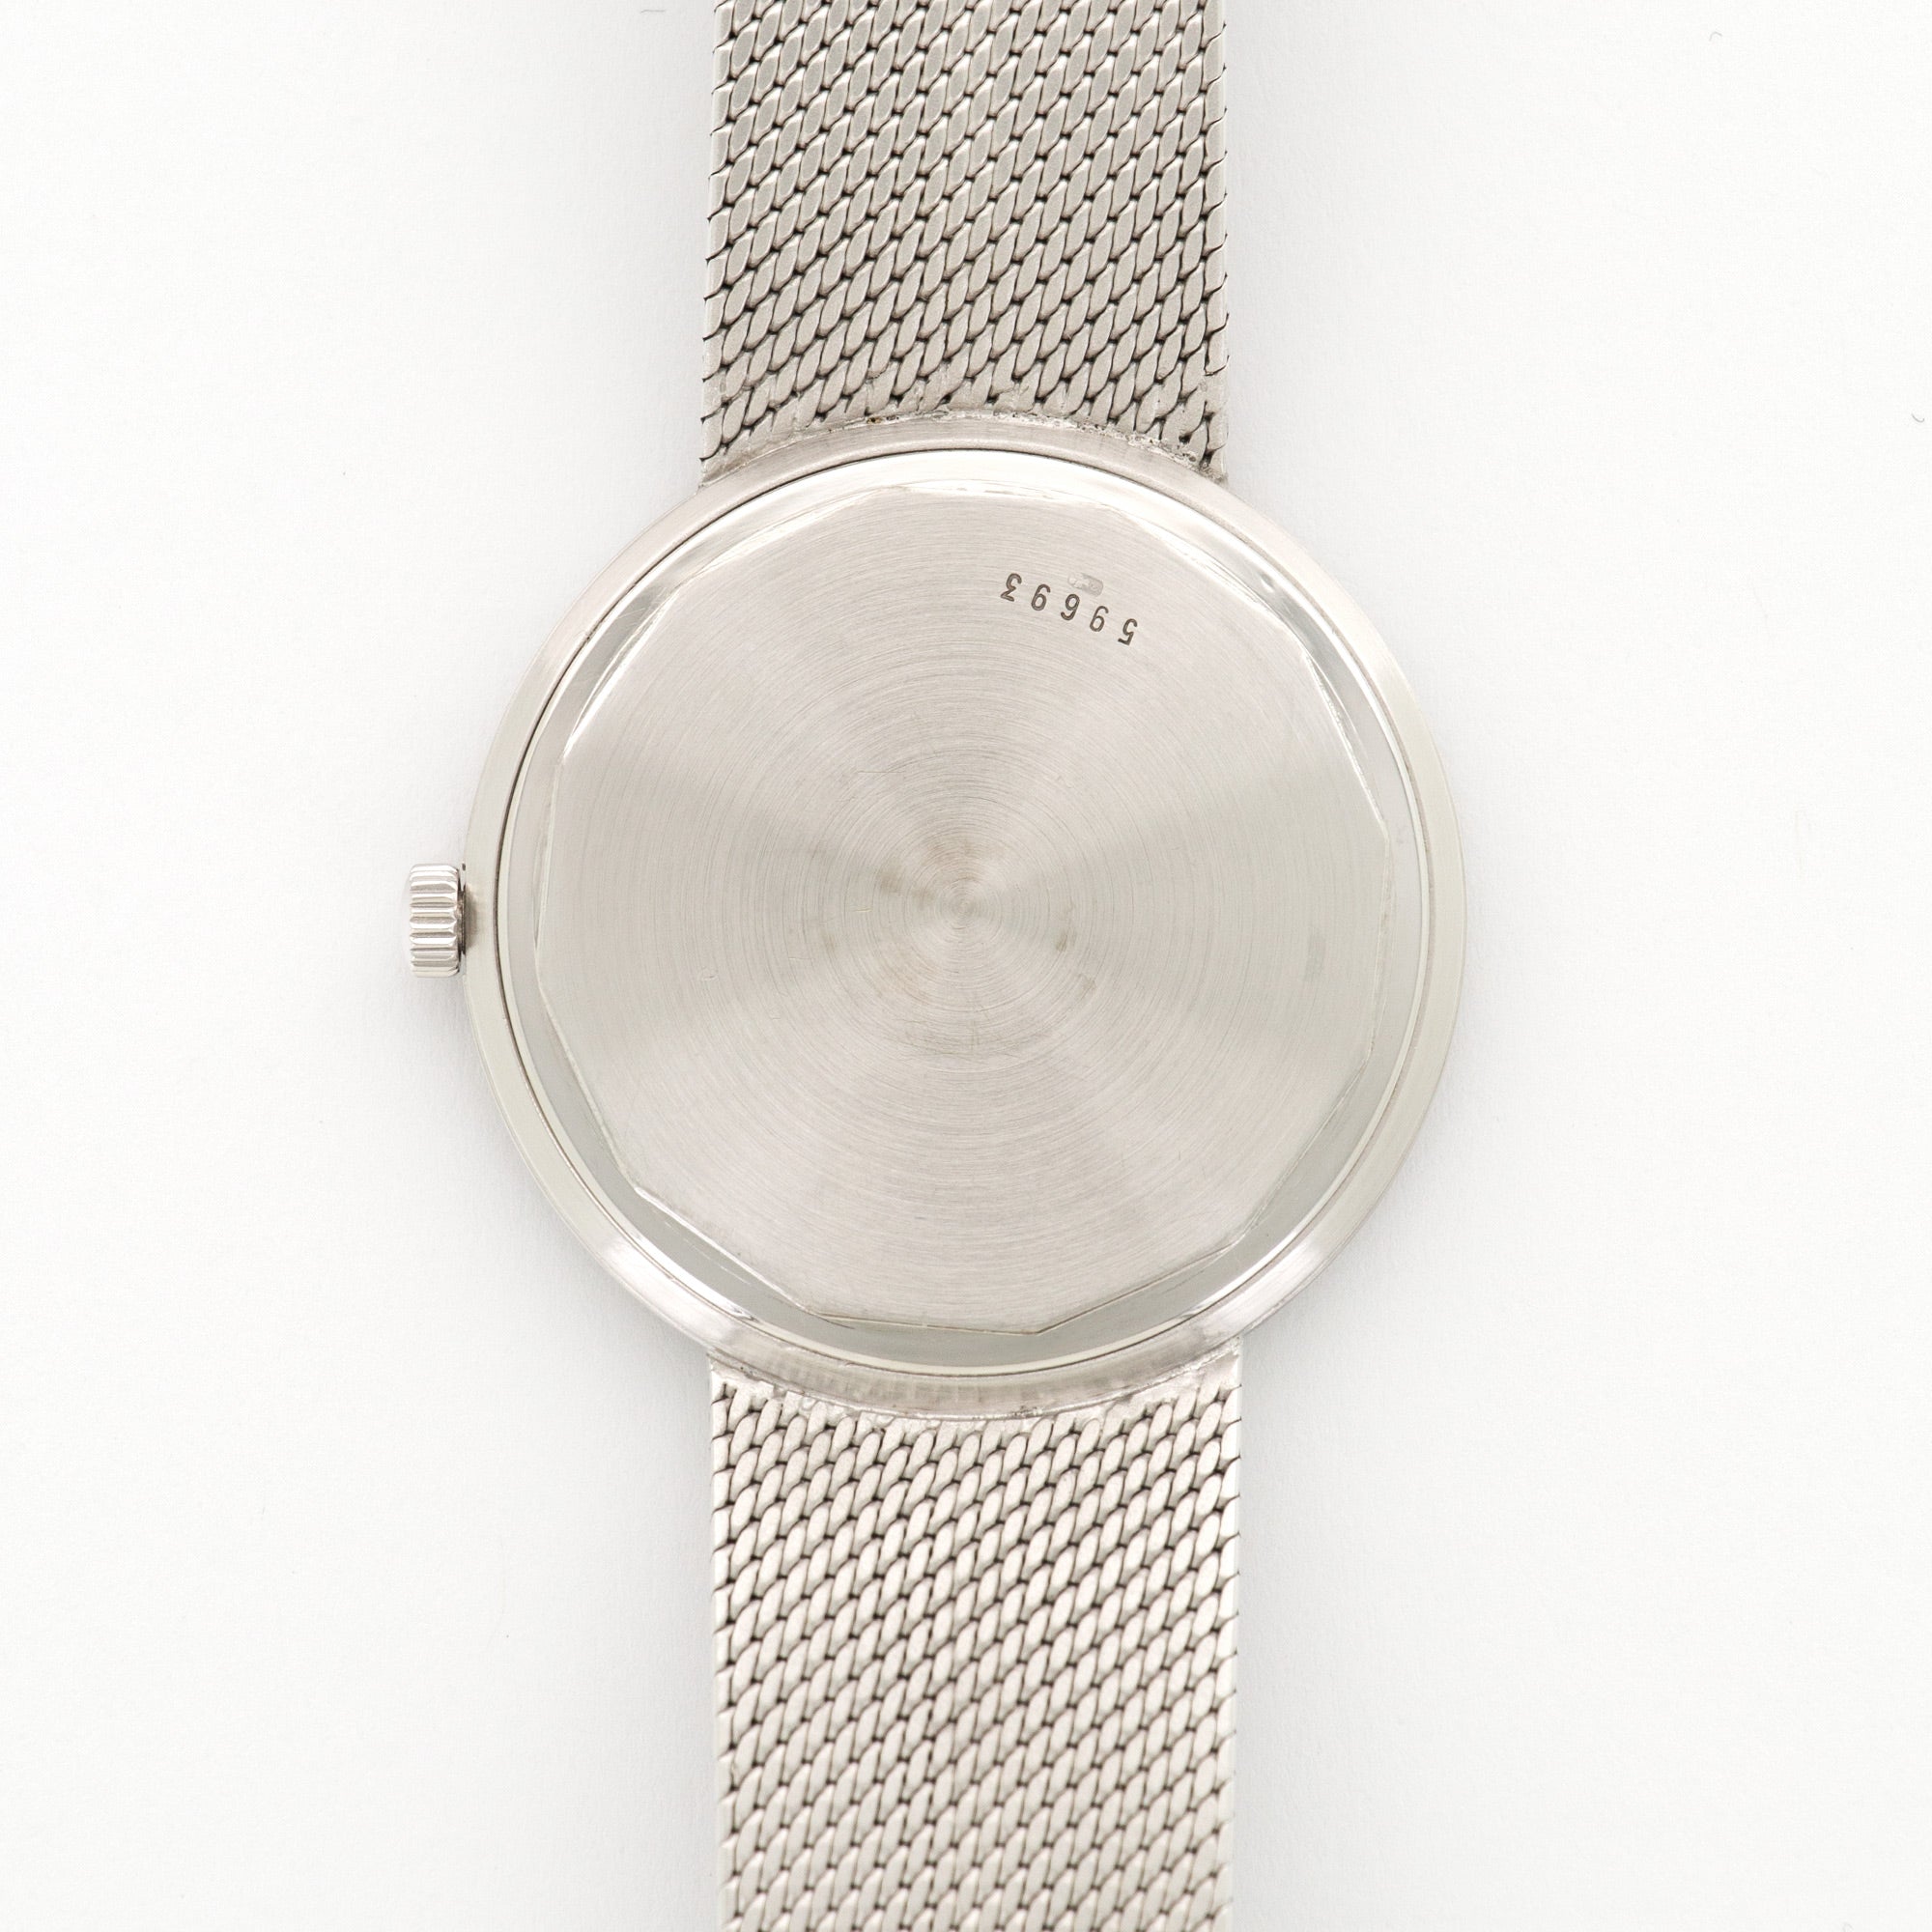 Audemars Piguet - Audemars Piguet White Gold Automatic Watch - The Keystone Watches